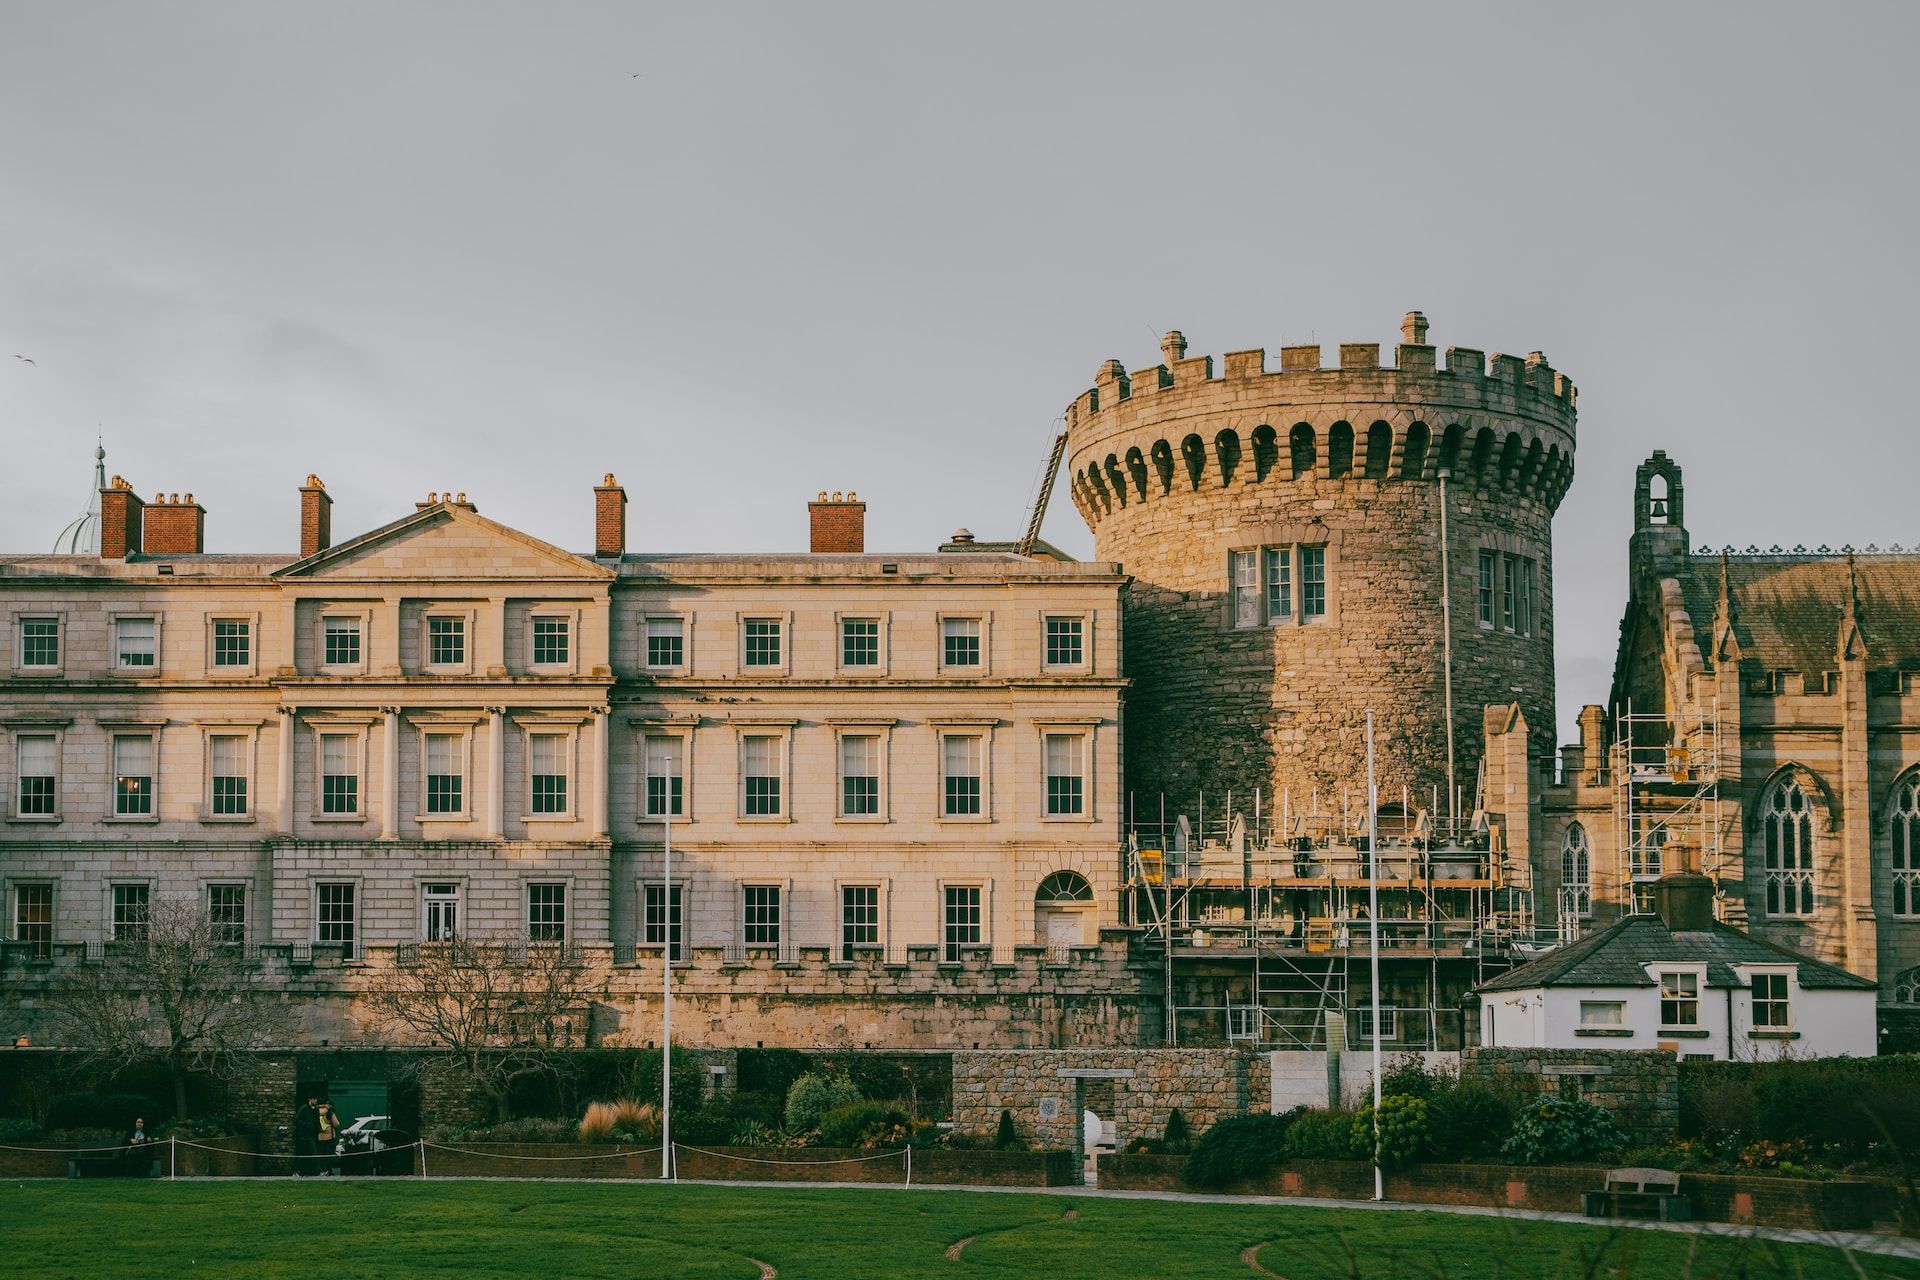 The Dublin Castle in Ireland